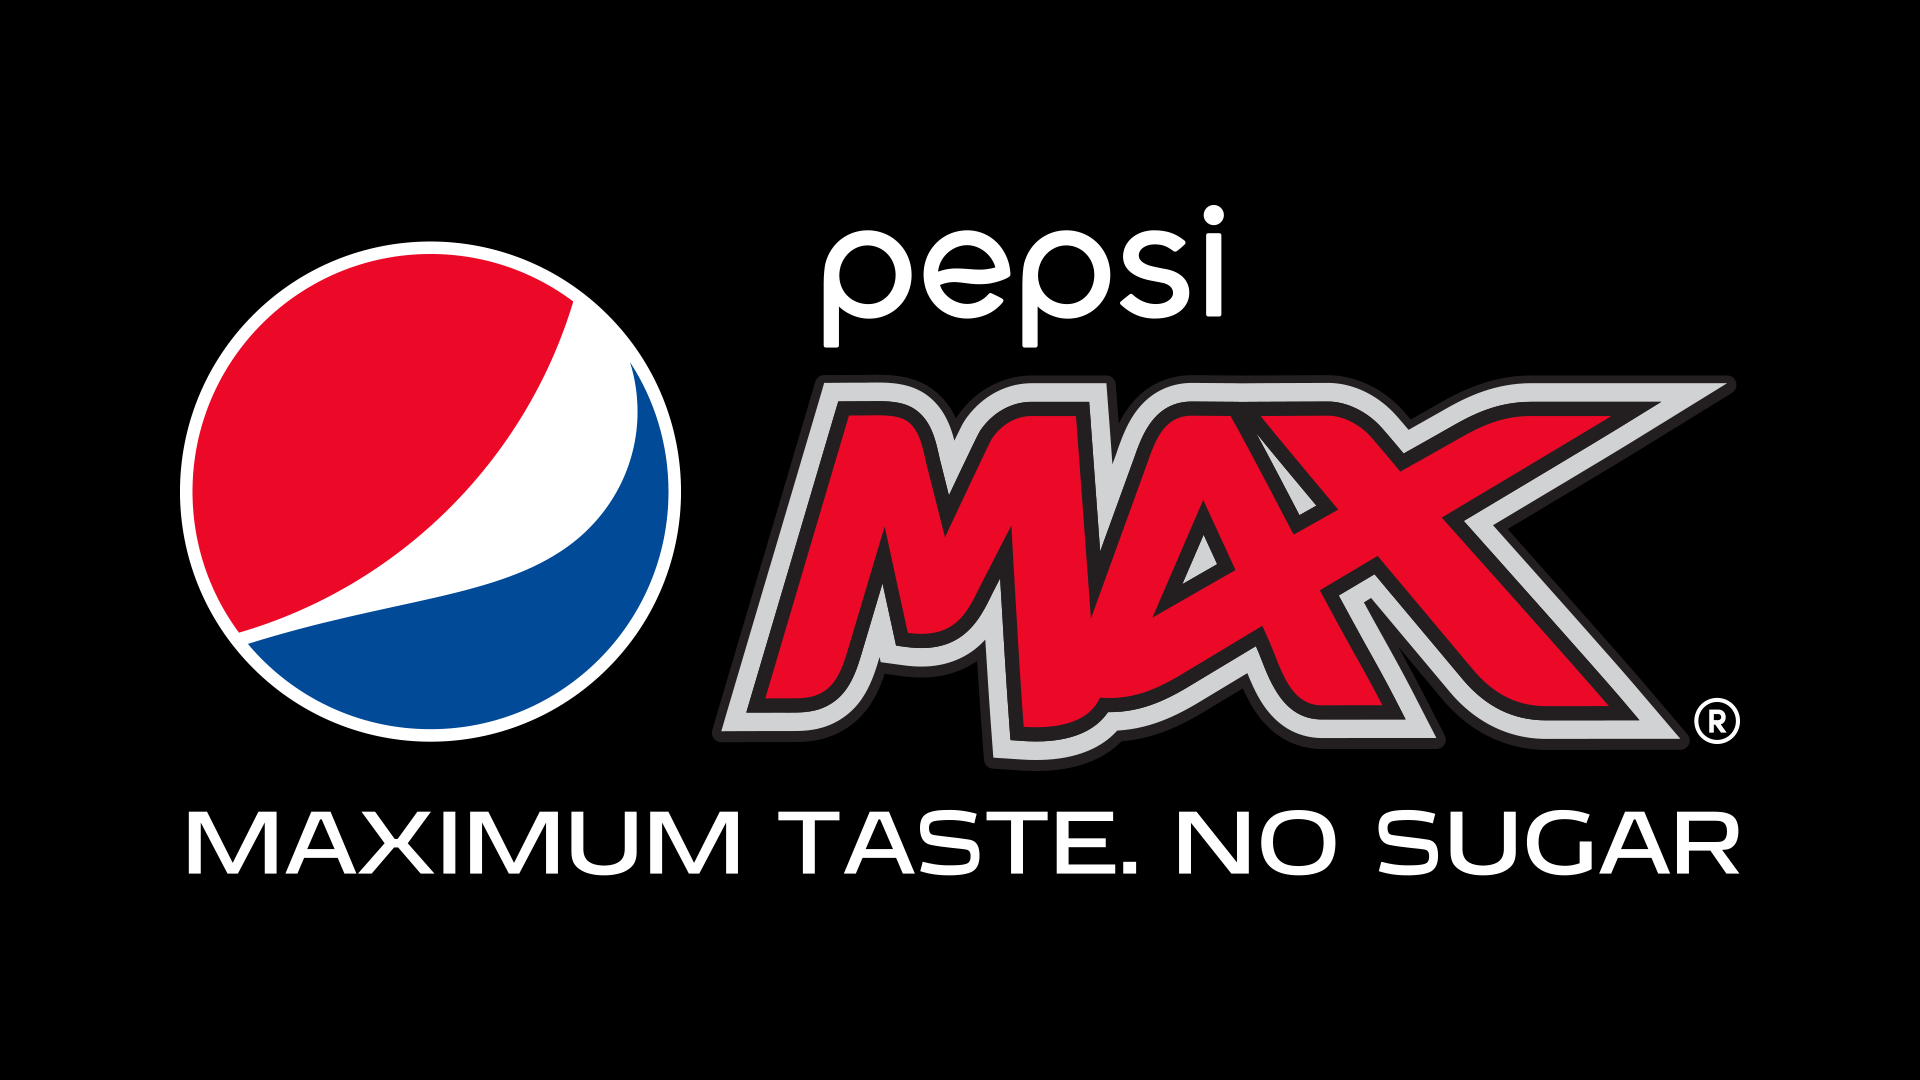 Pepsi Max Logo - Image - Pepsi Max Logo.png | Pepsi Wiki | FANDOM powered by Wikia